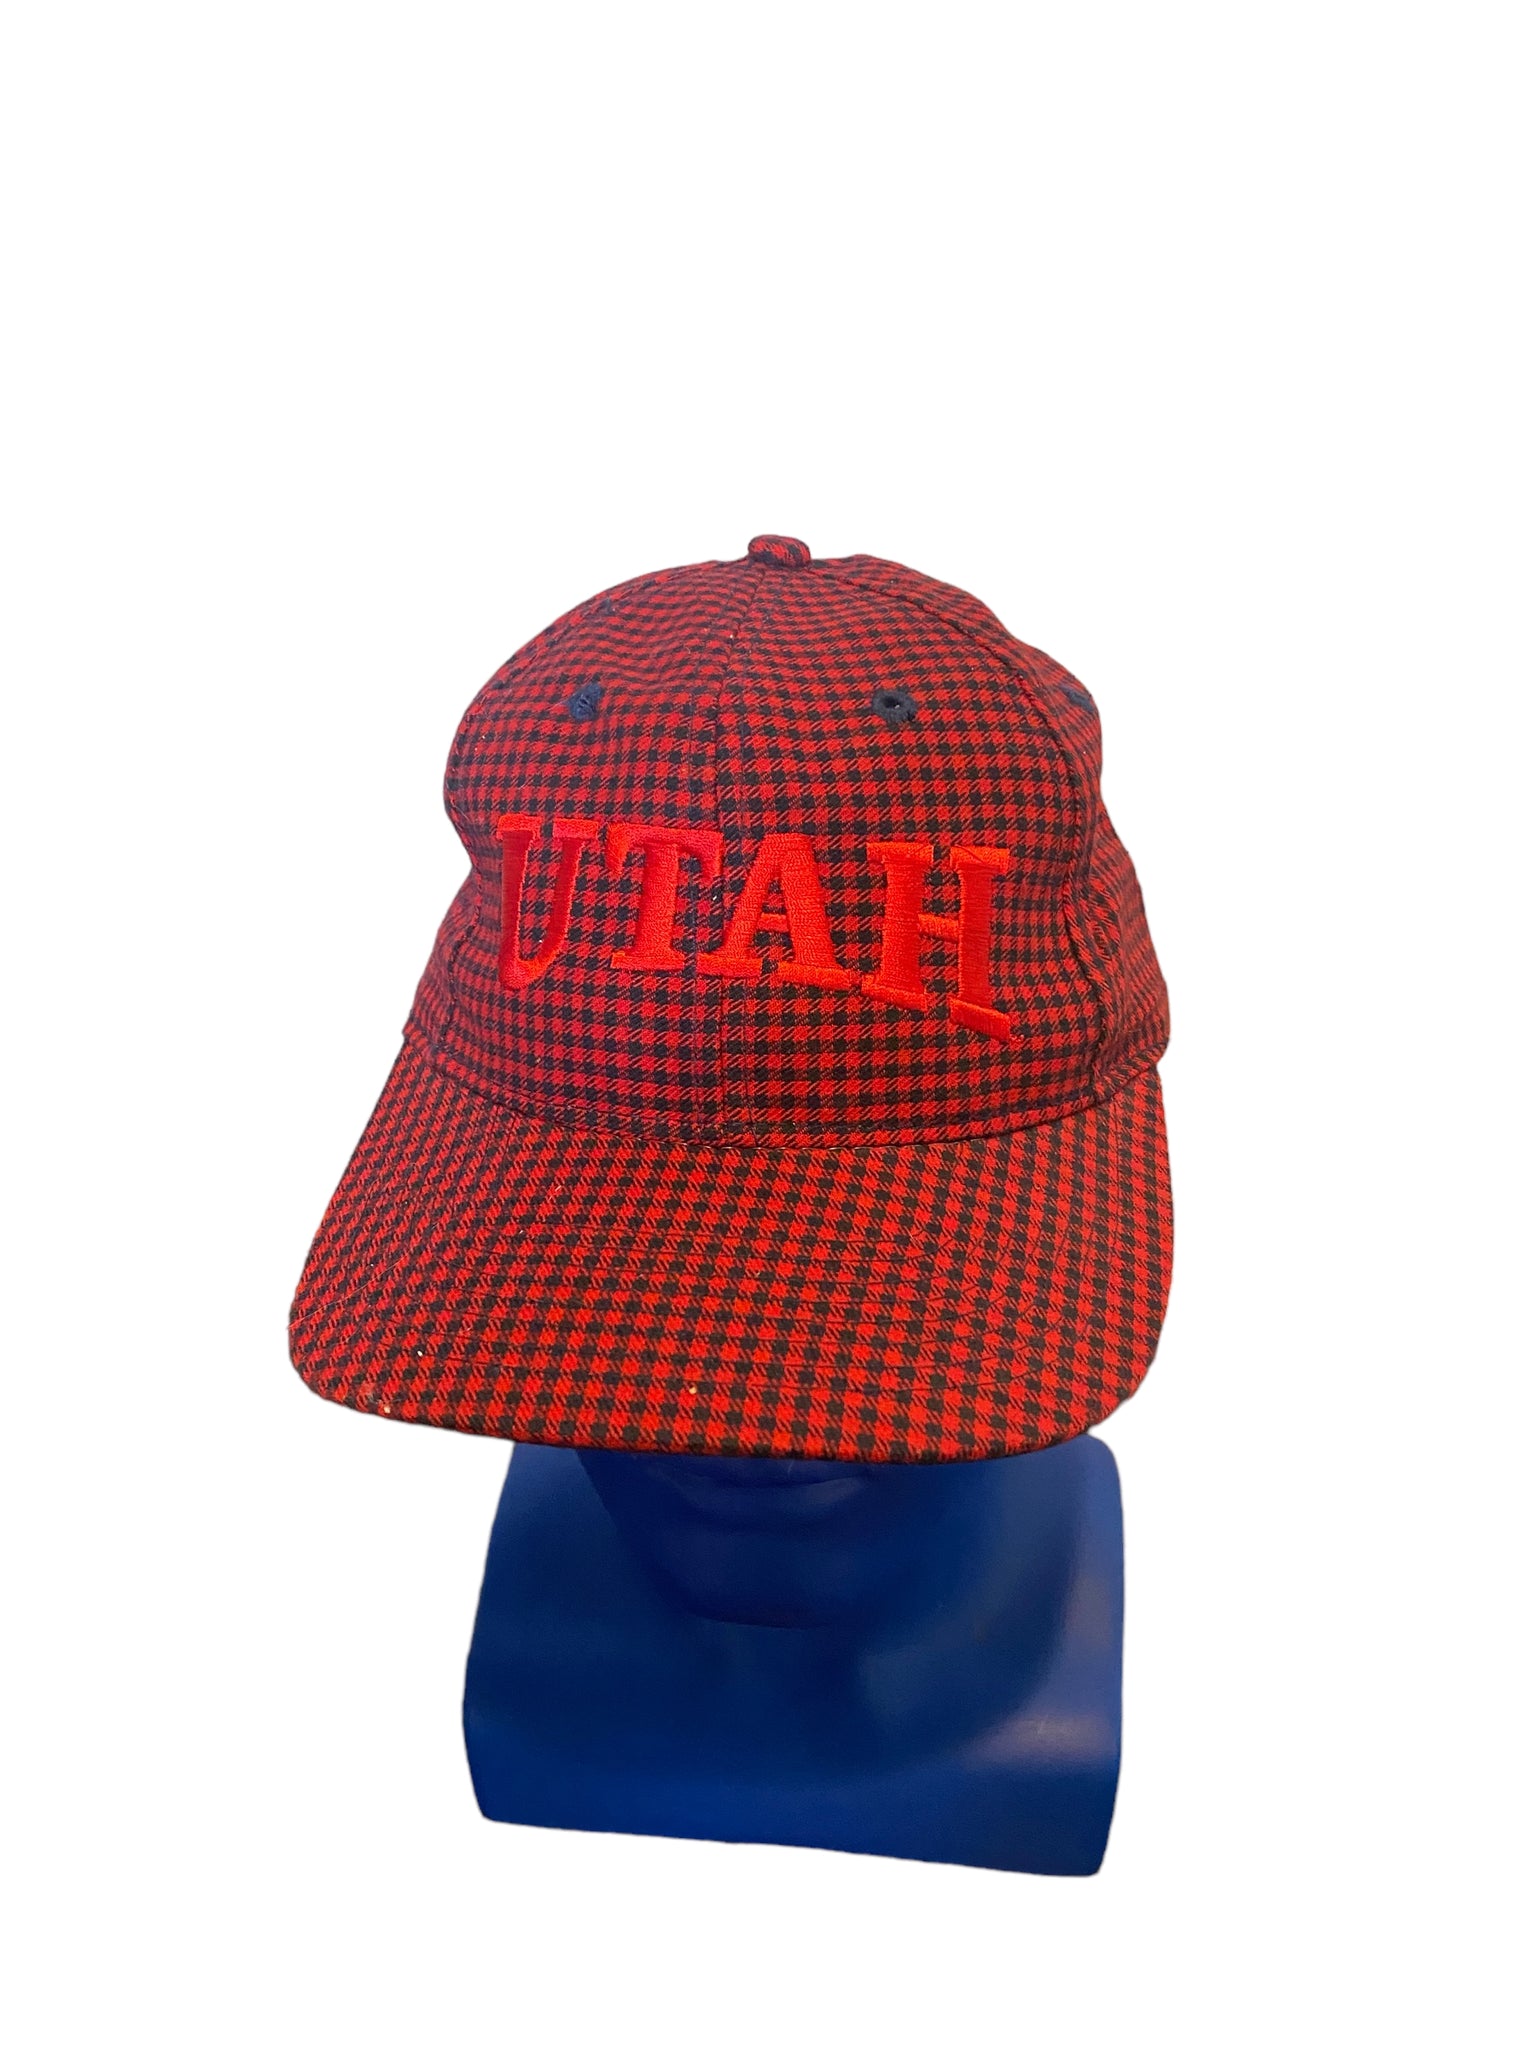 the game plaid utah embroidered adjustable starp hat